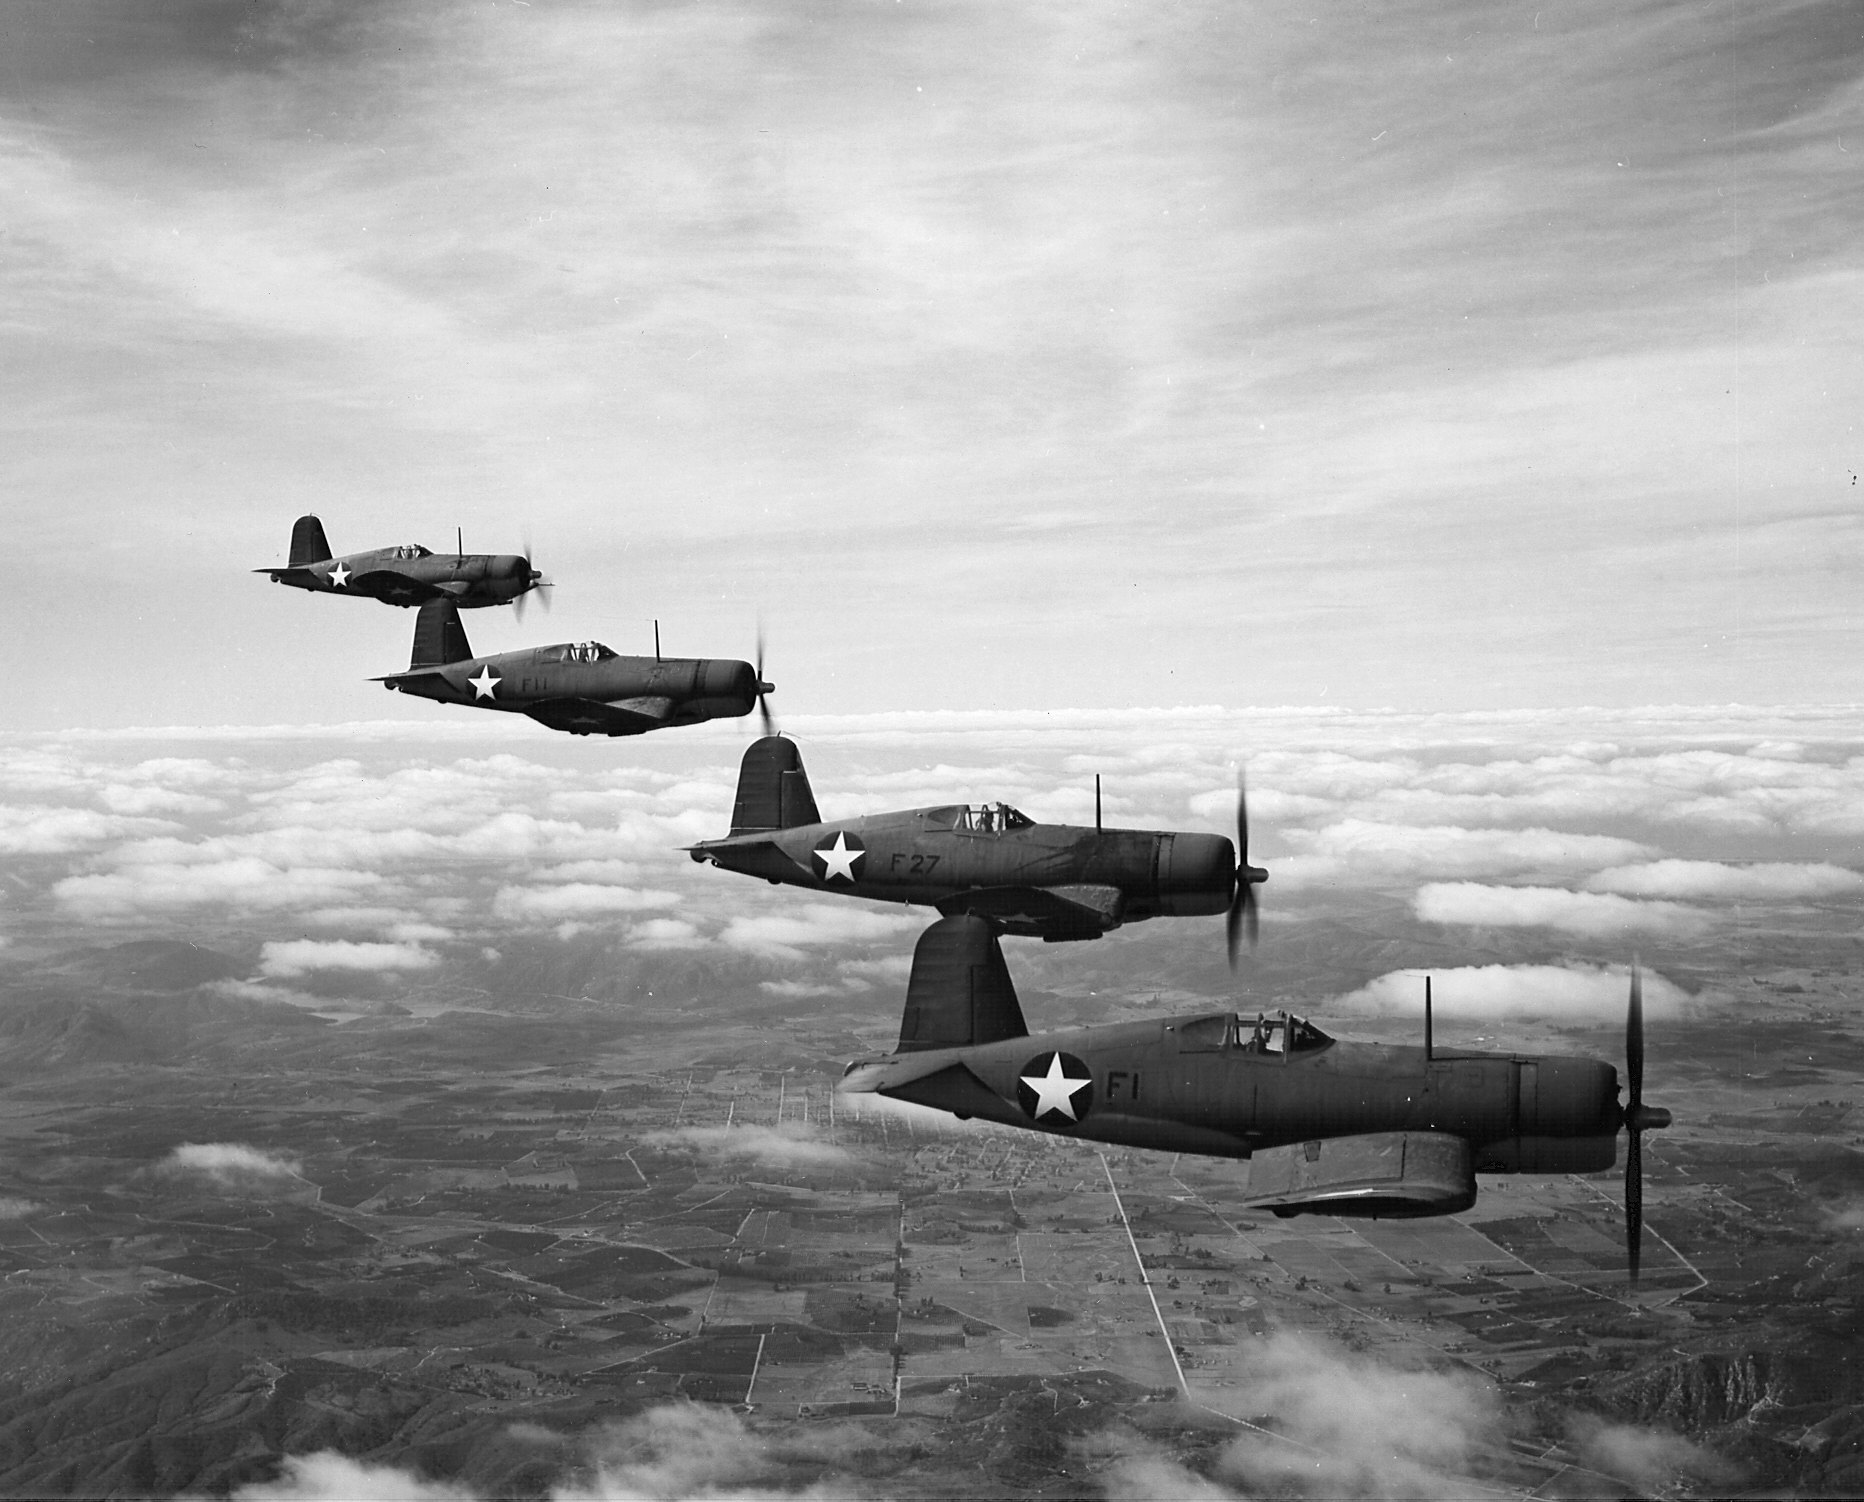 world war 2 air combat maneuvers